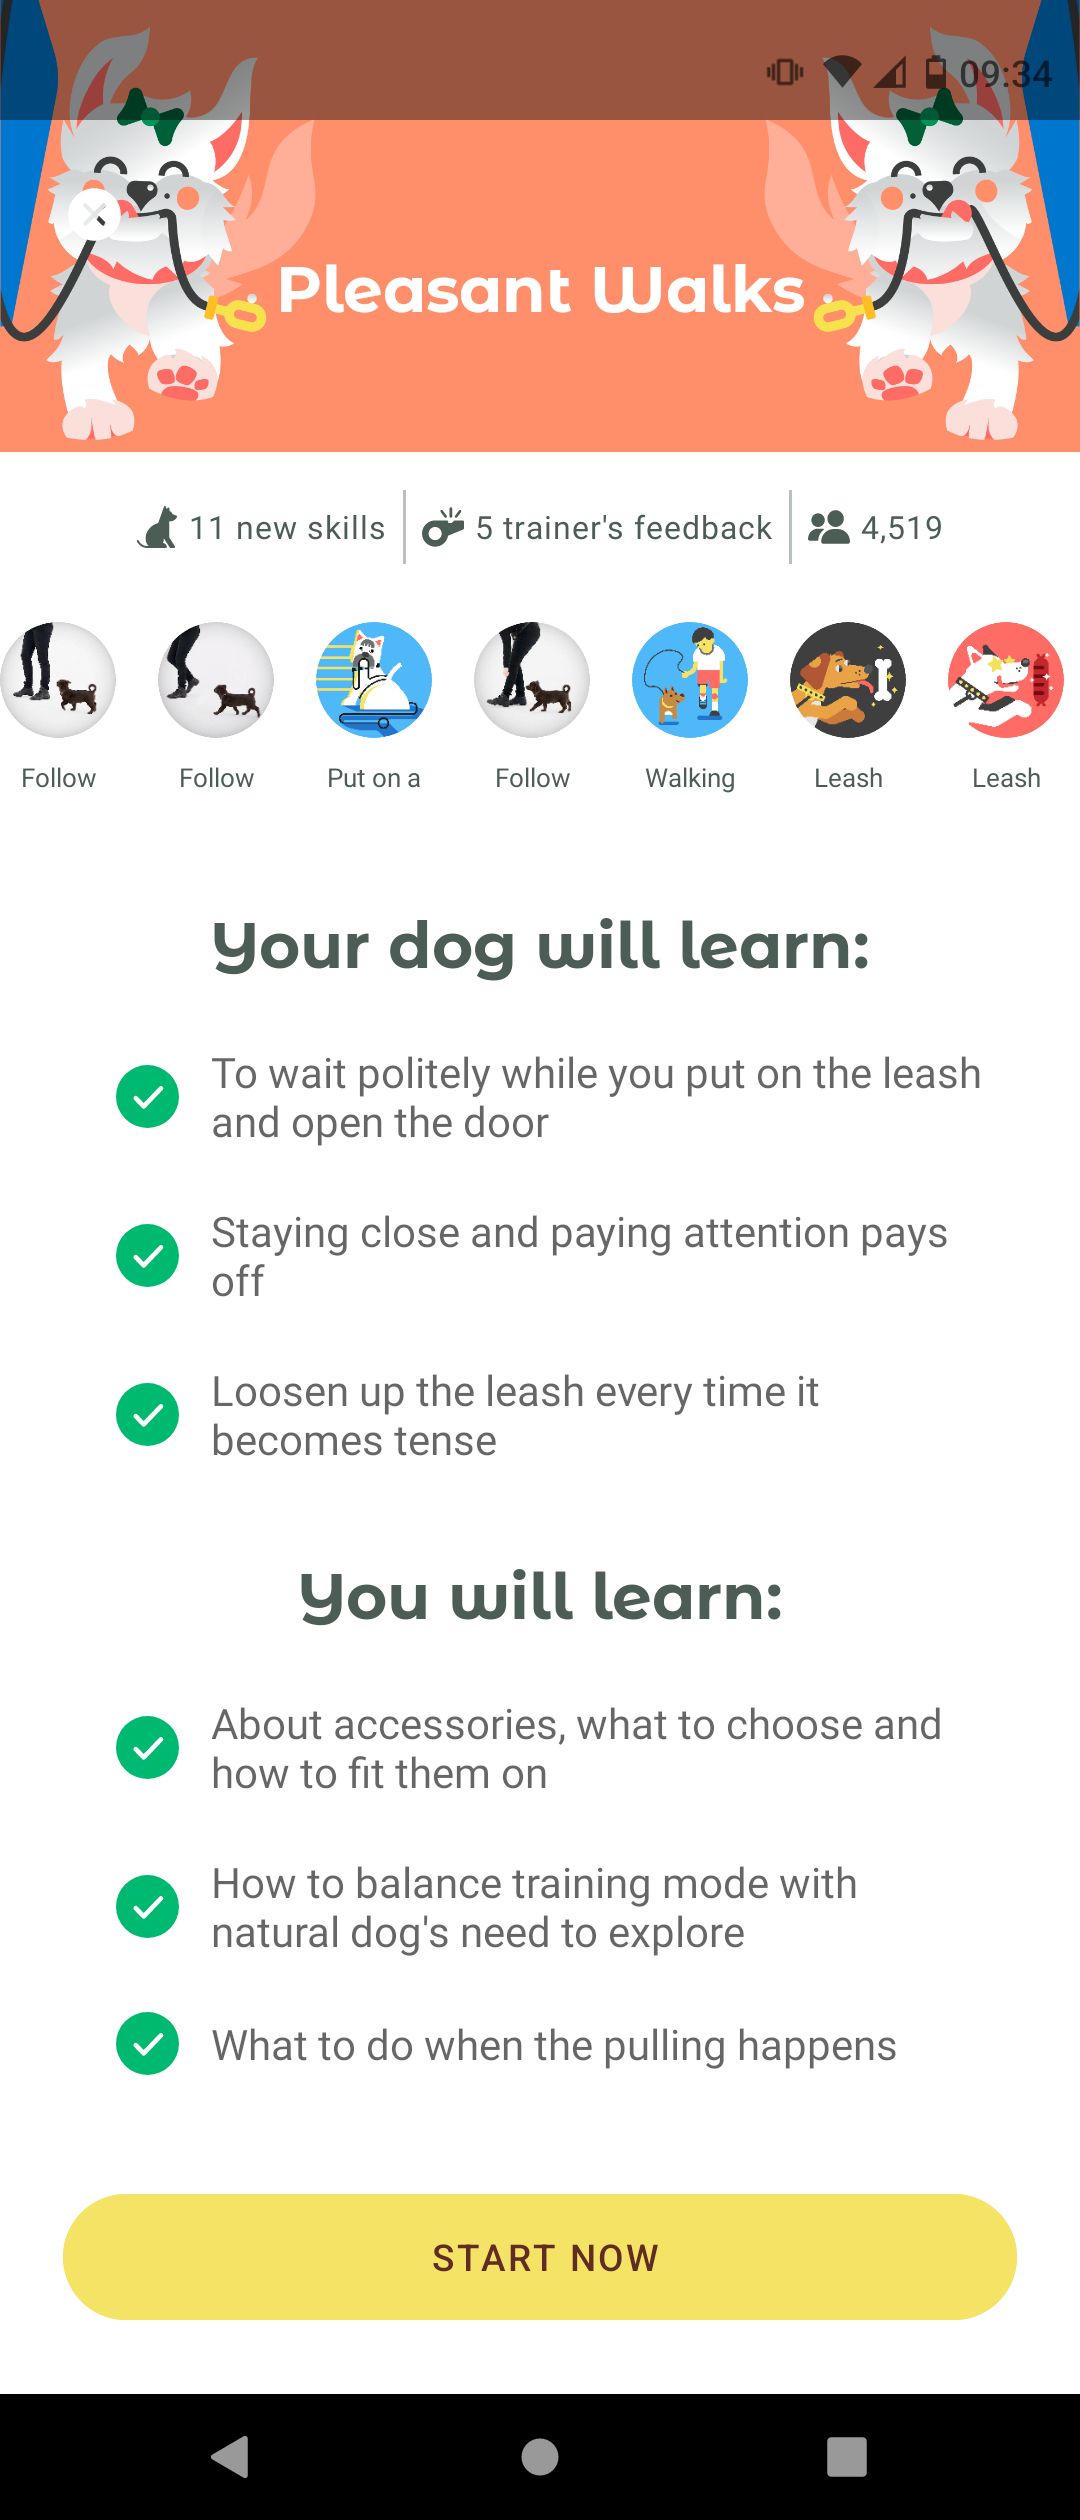 Dogo App Program for Pleasant Dog Walks